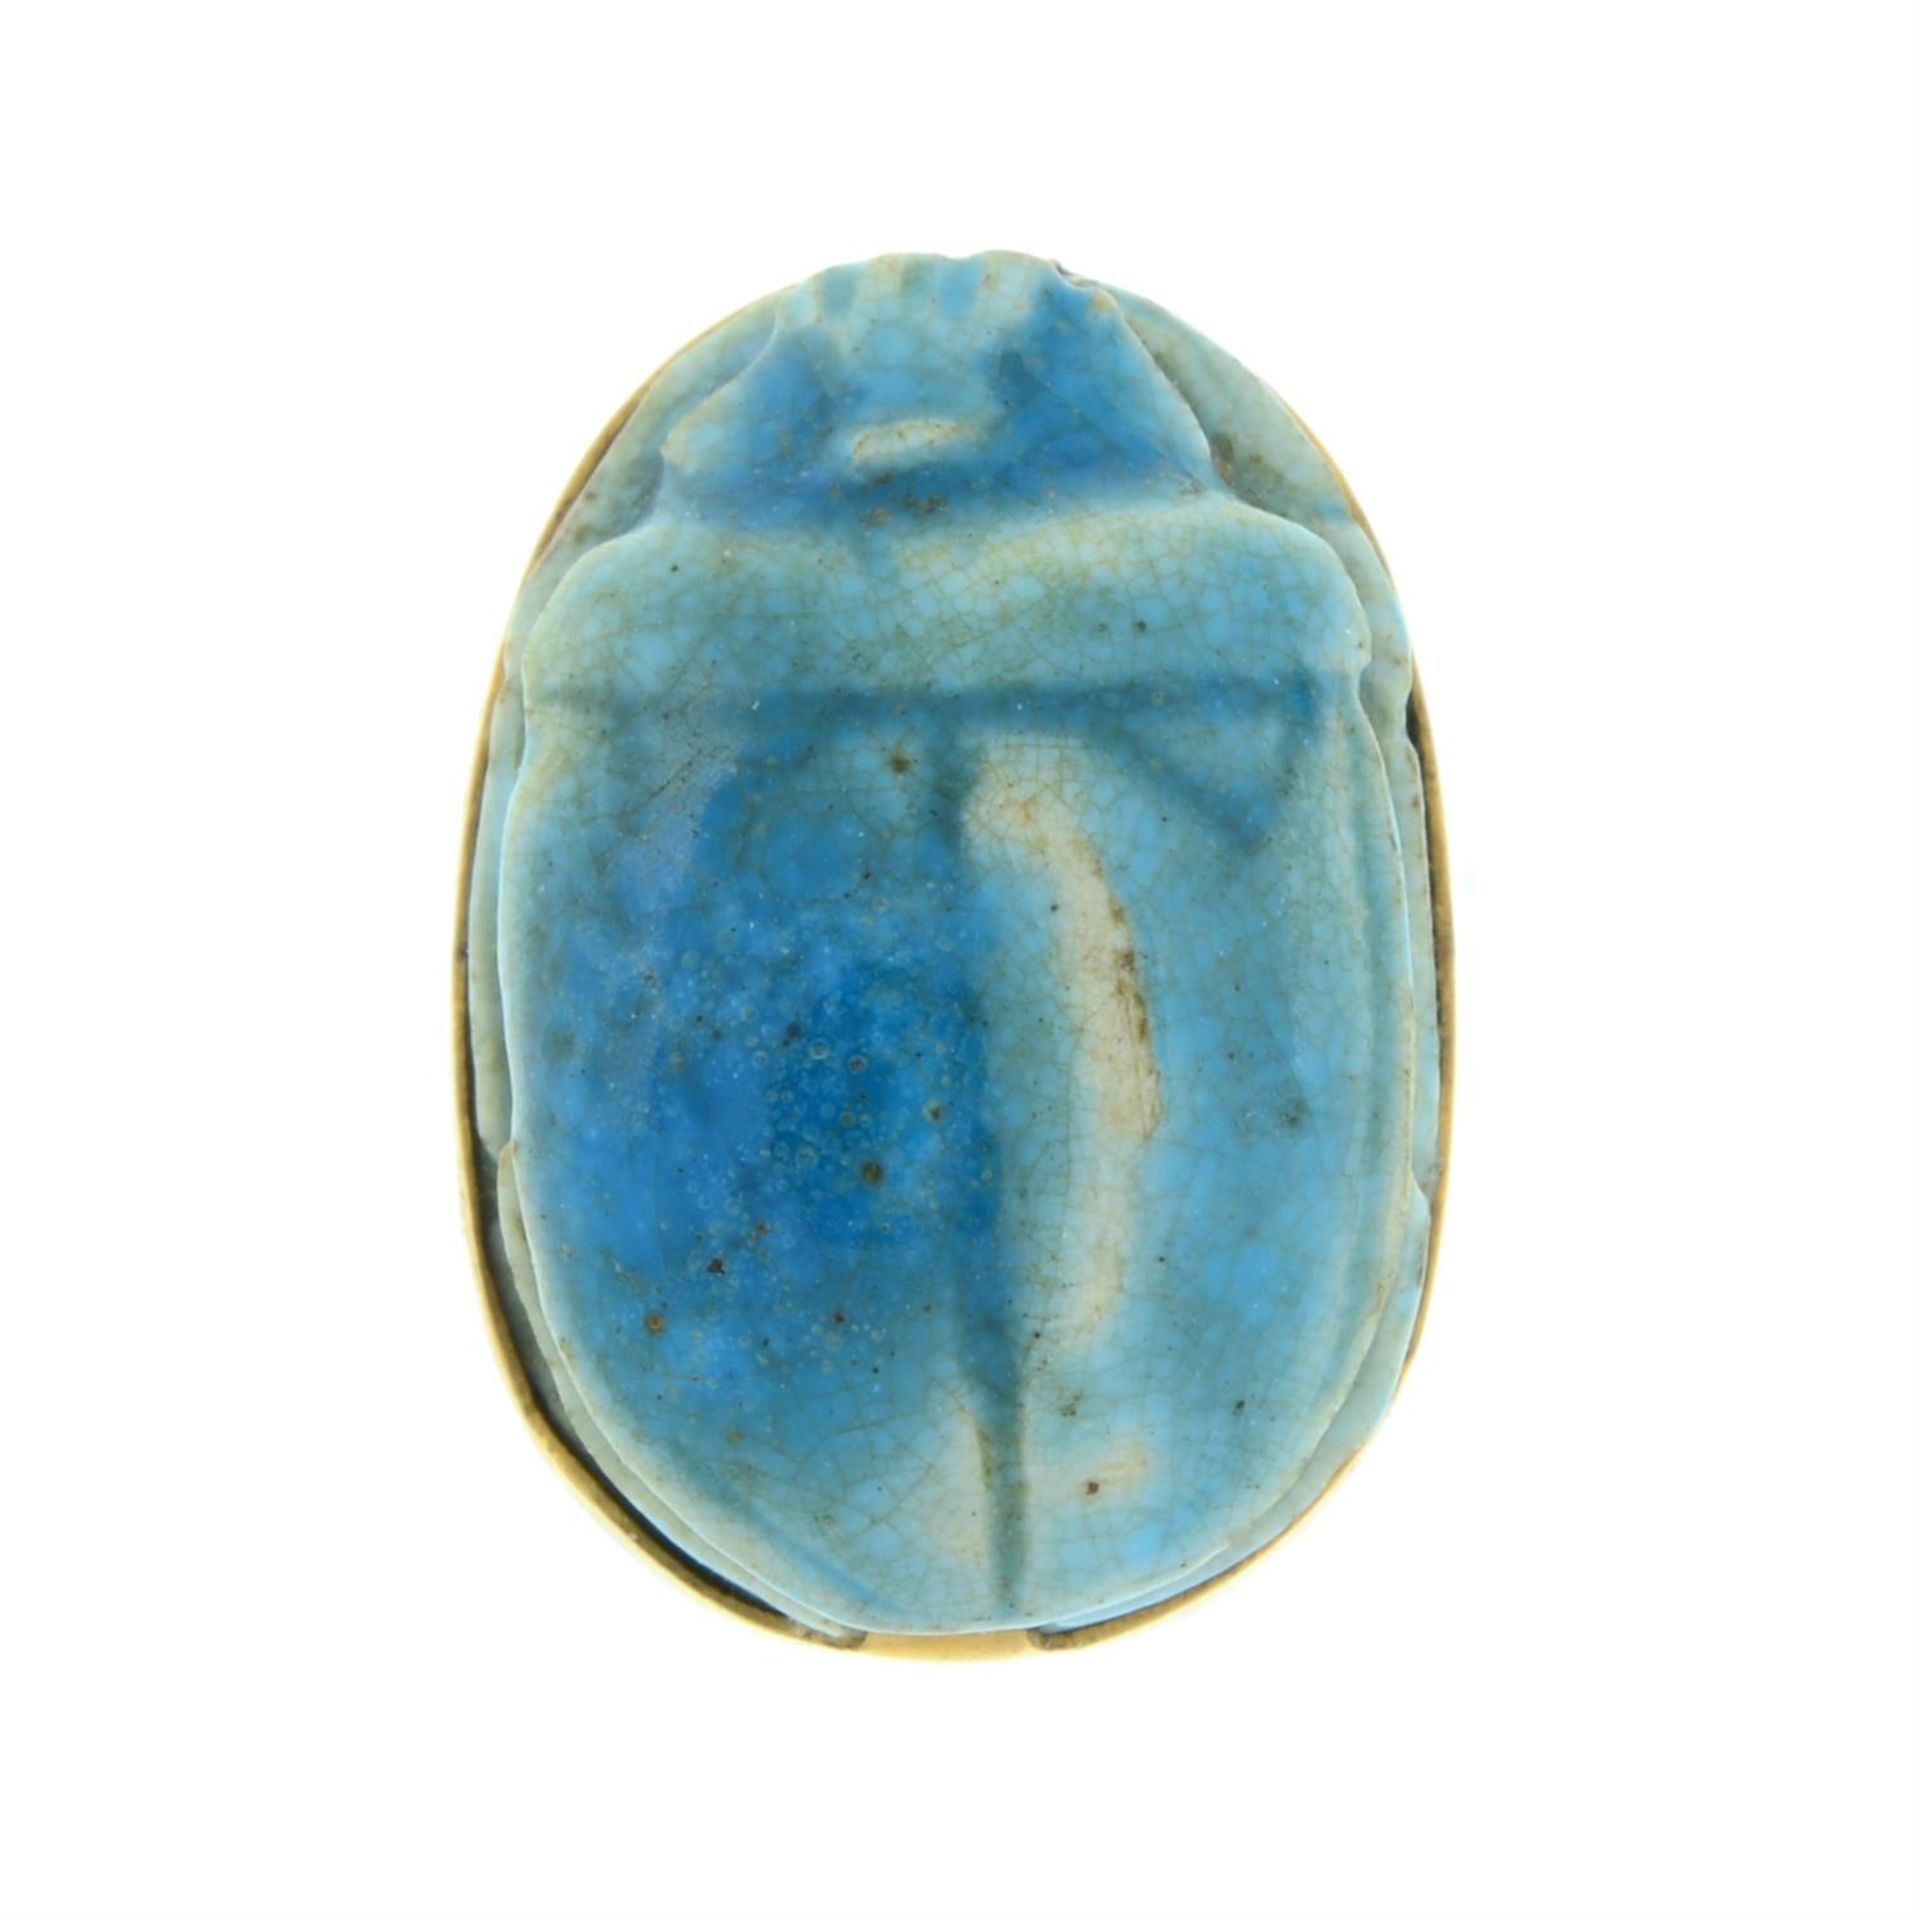 A porcelain scrub beetle slider pendant.